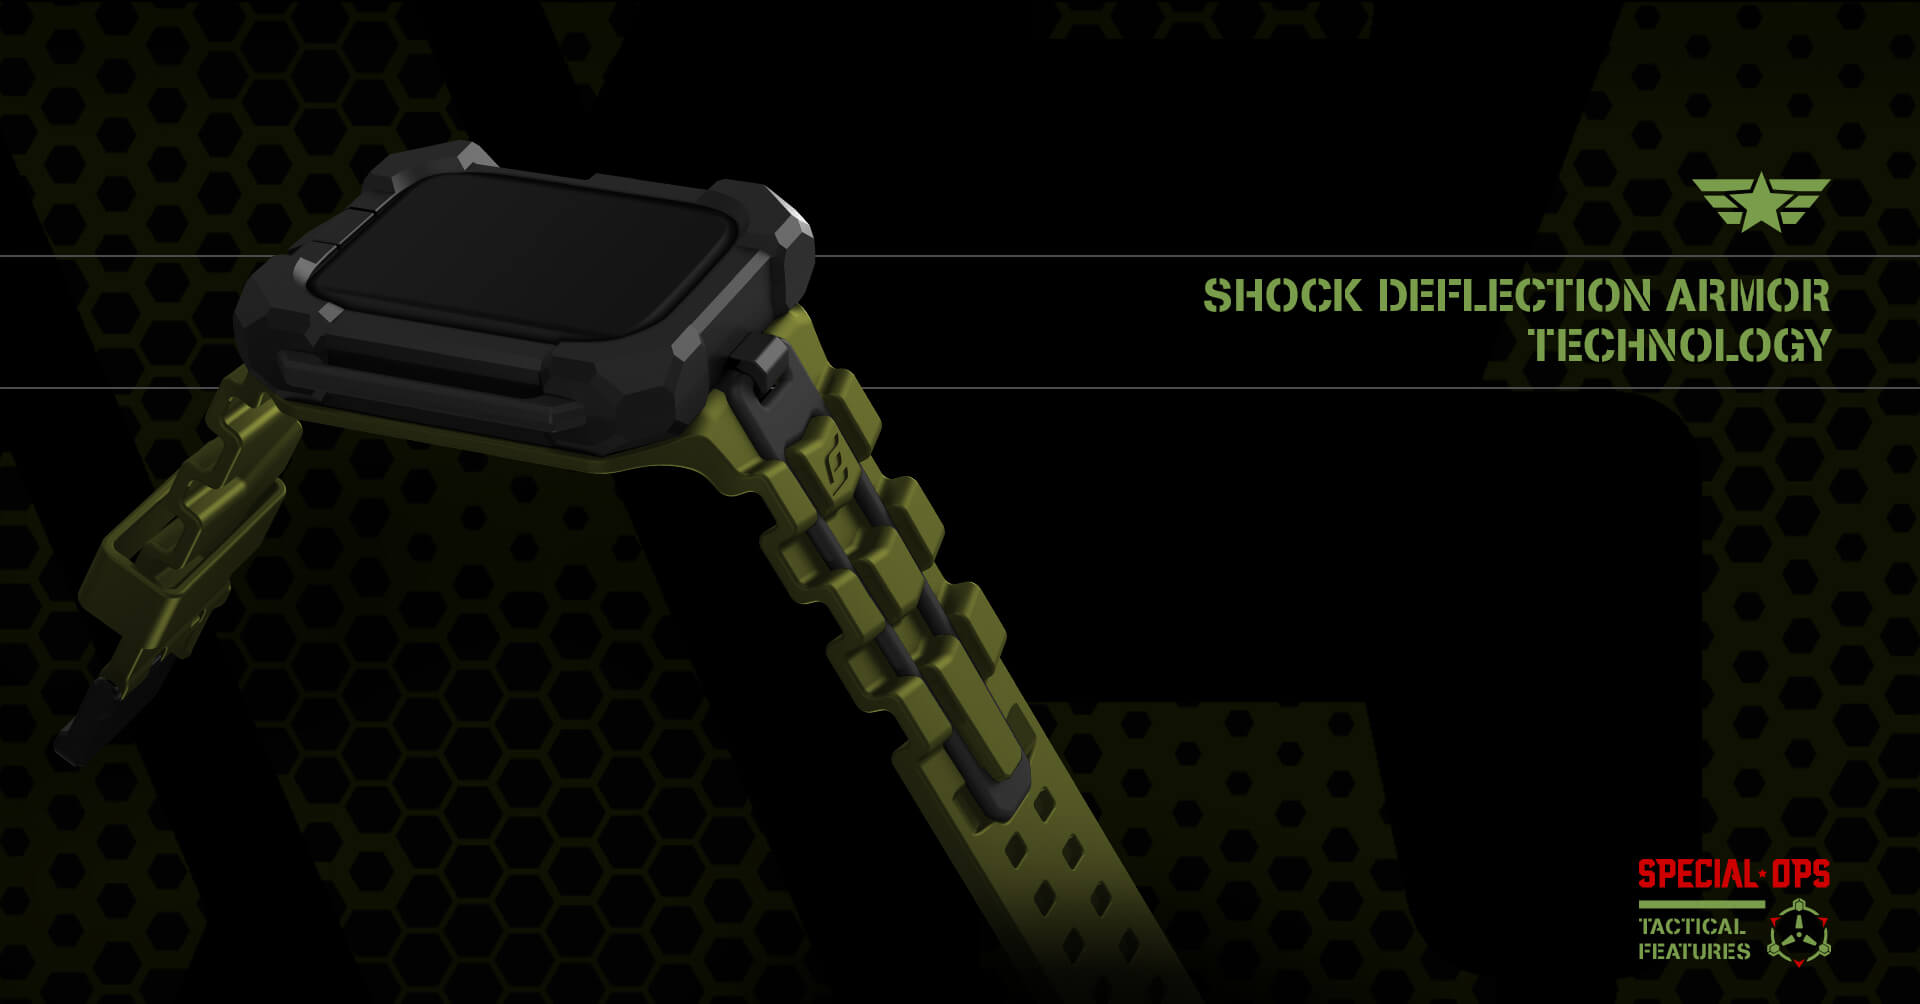 Shock Deflection Armor Technology